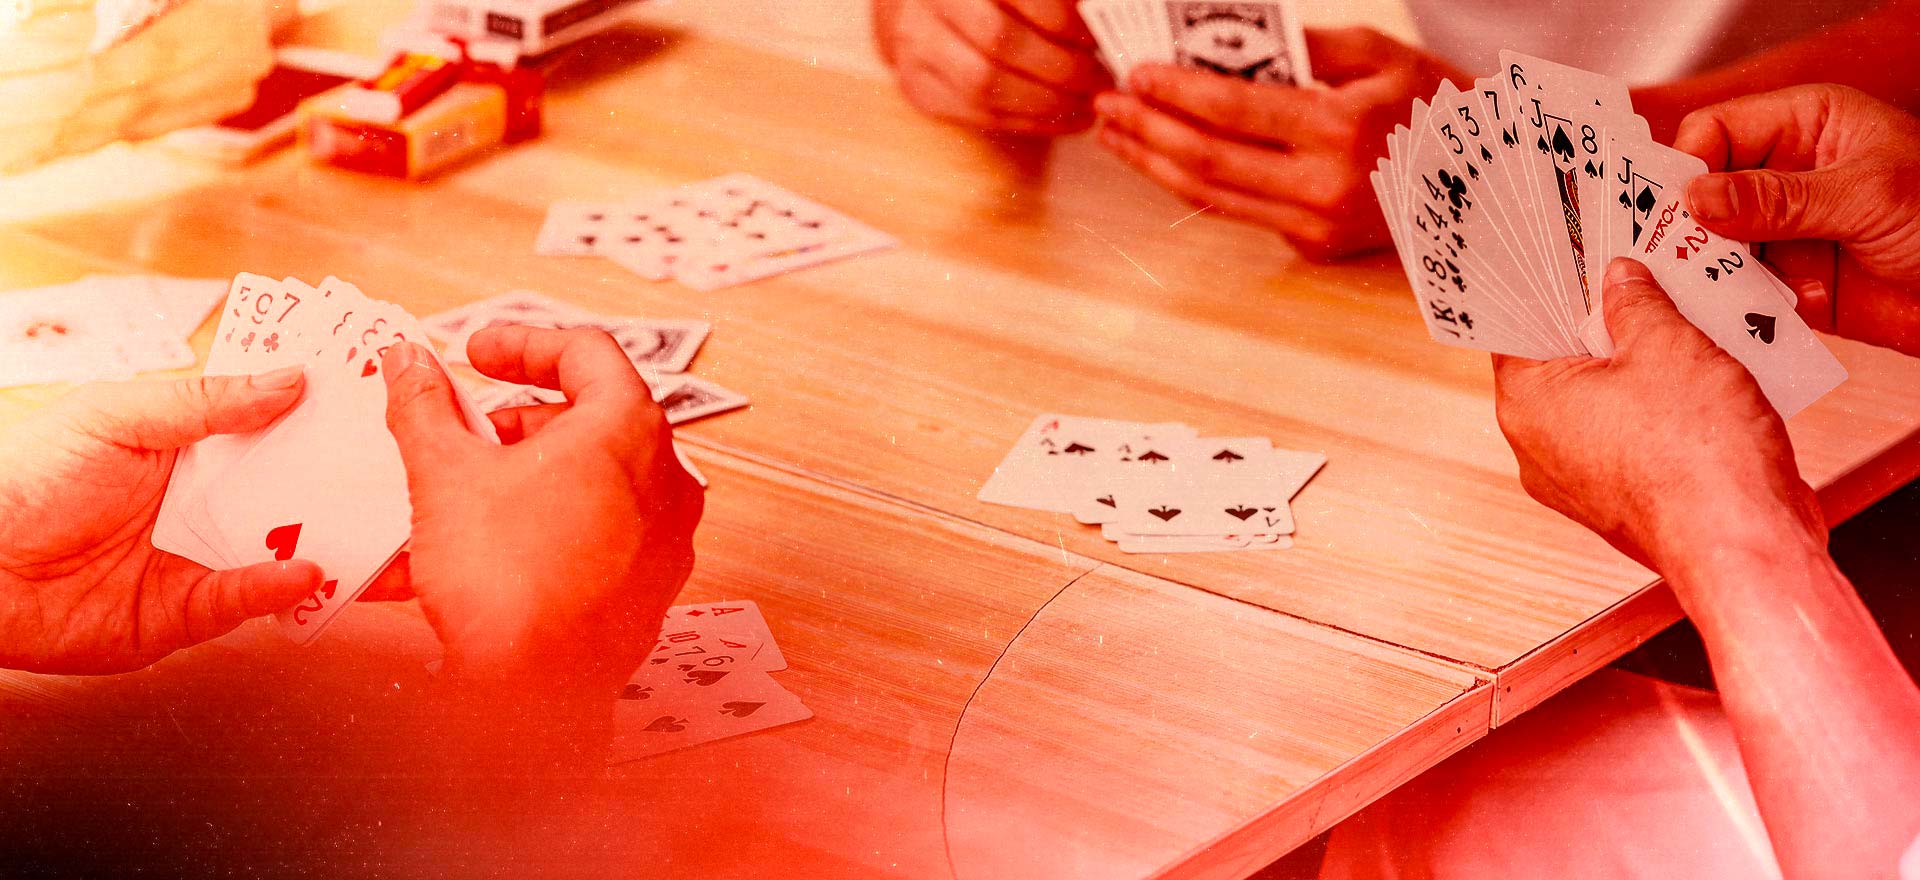 Come giocare a Scala 40: regole, punteggi e chiusura - PokerStars